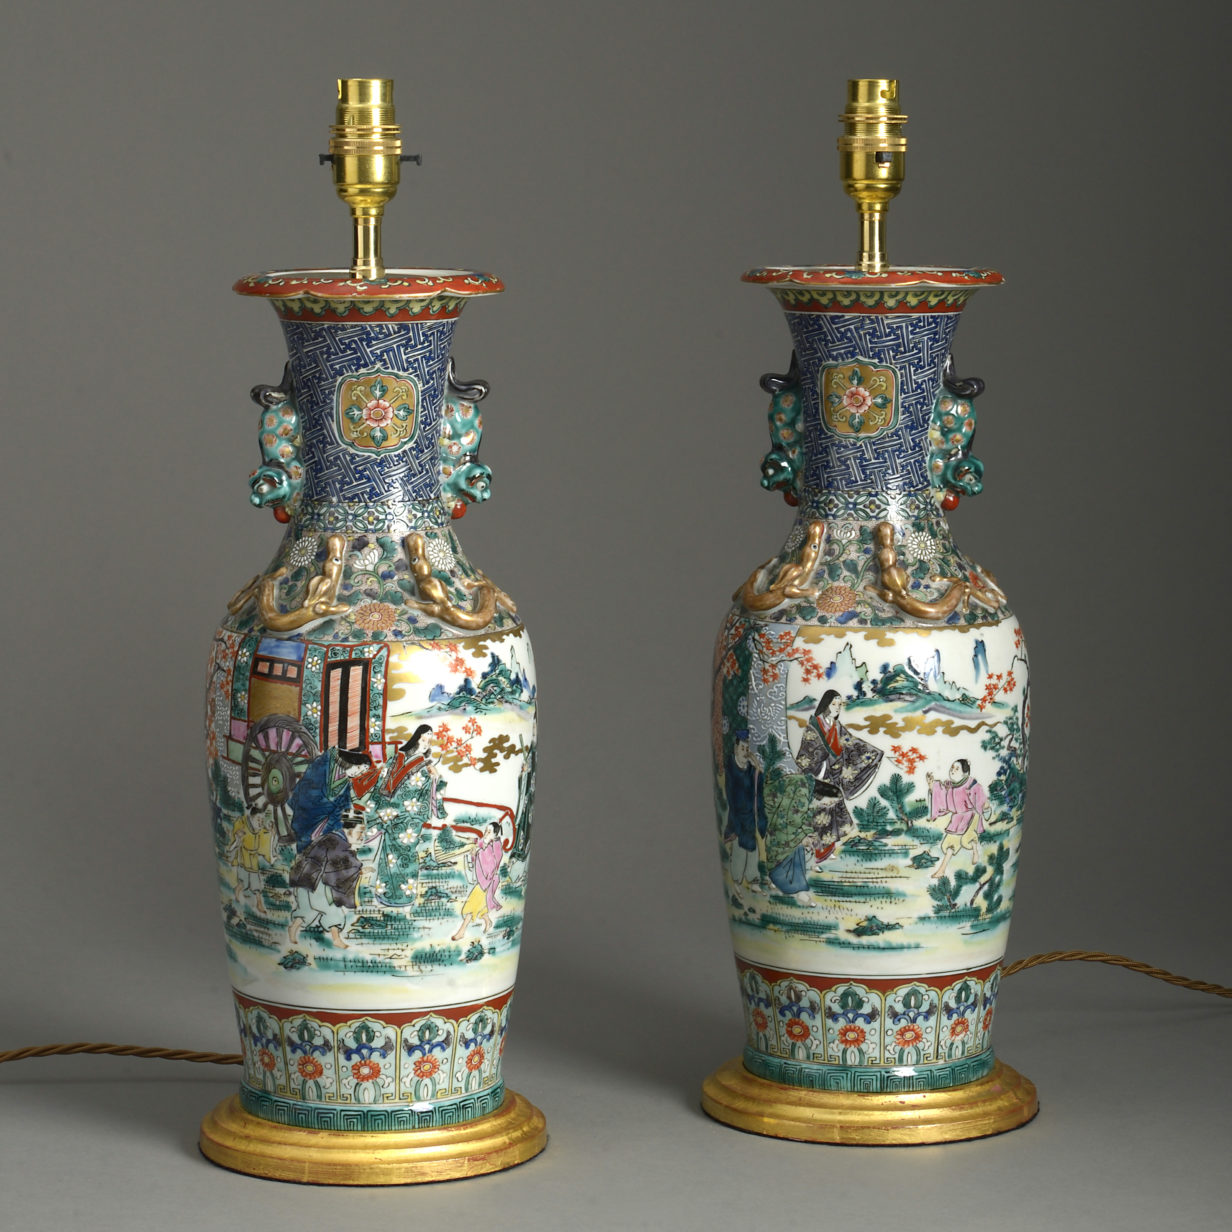 Pair of 19th century kutani porcelain vase lamps